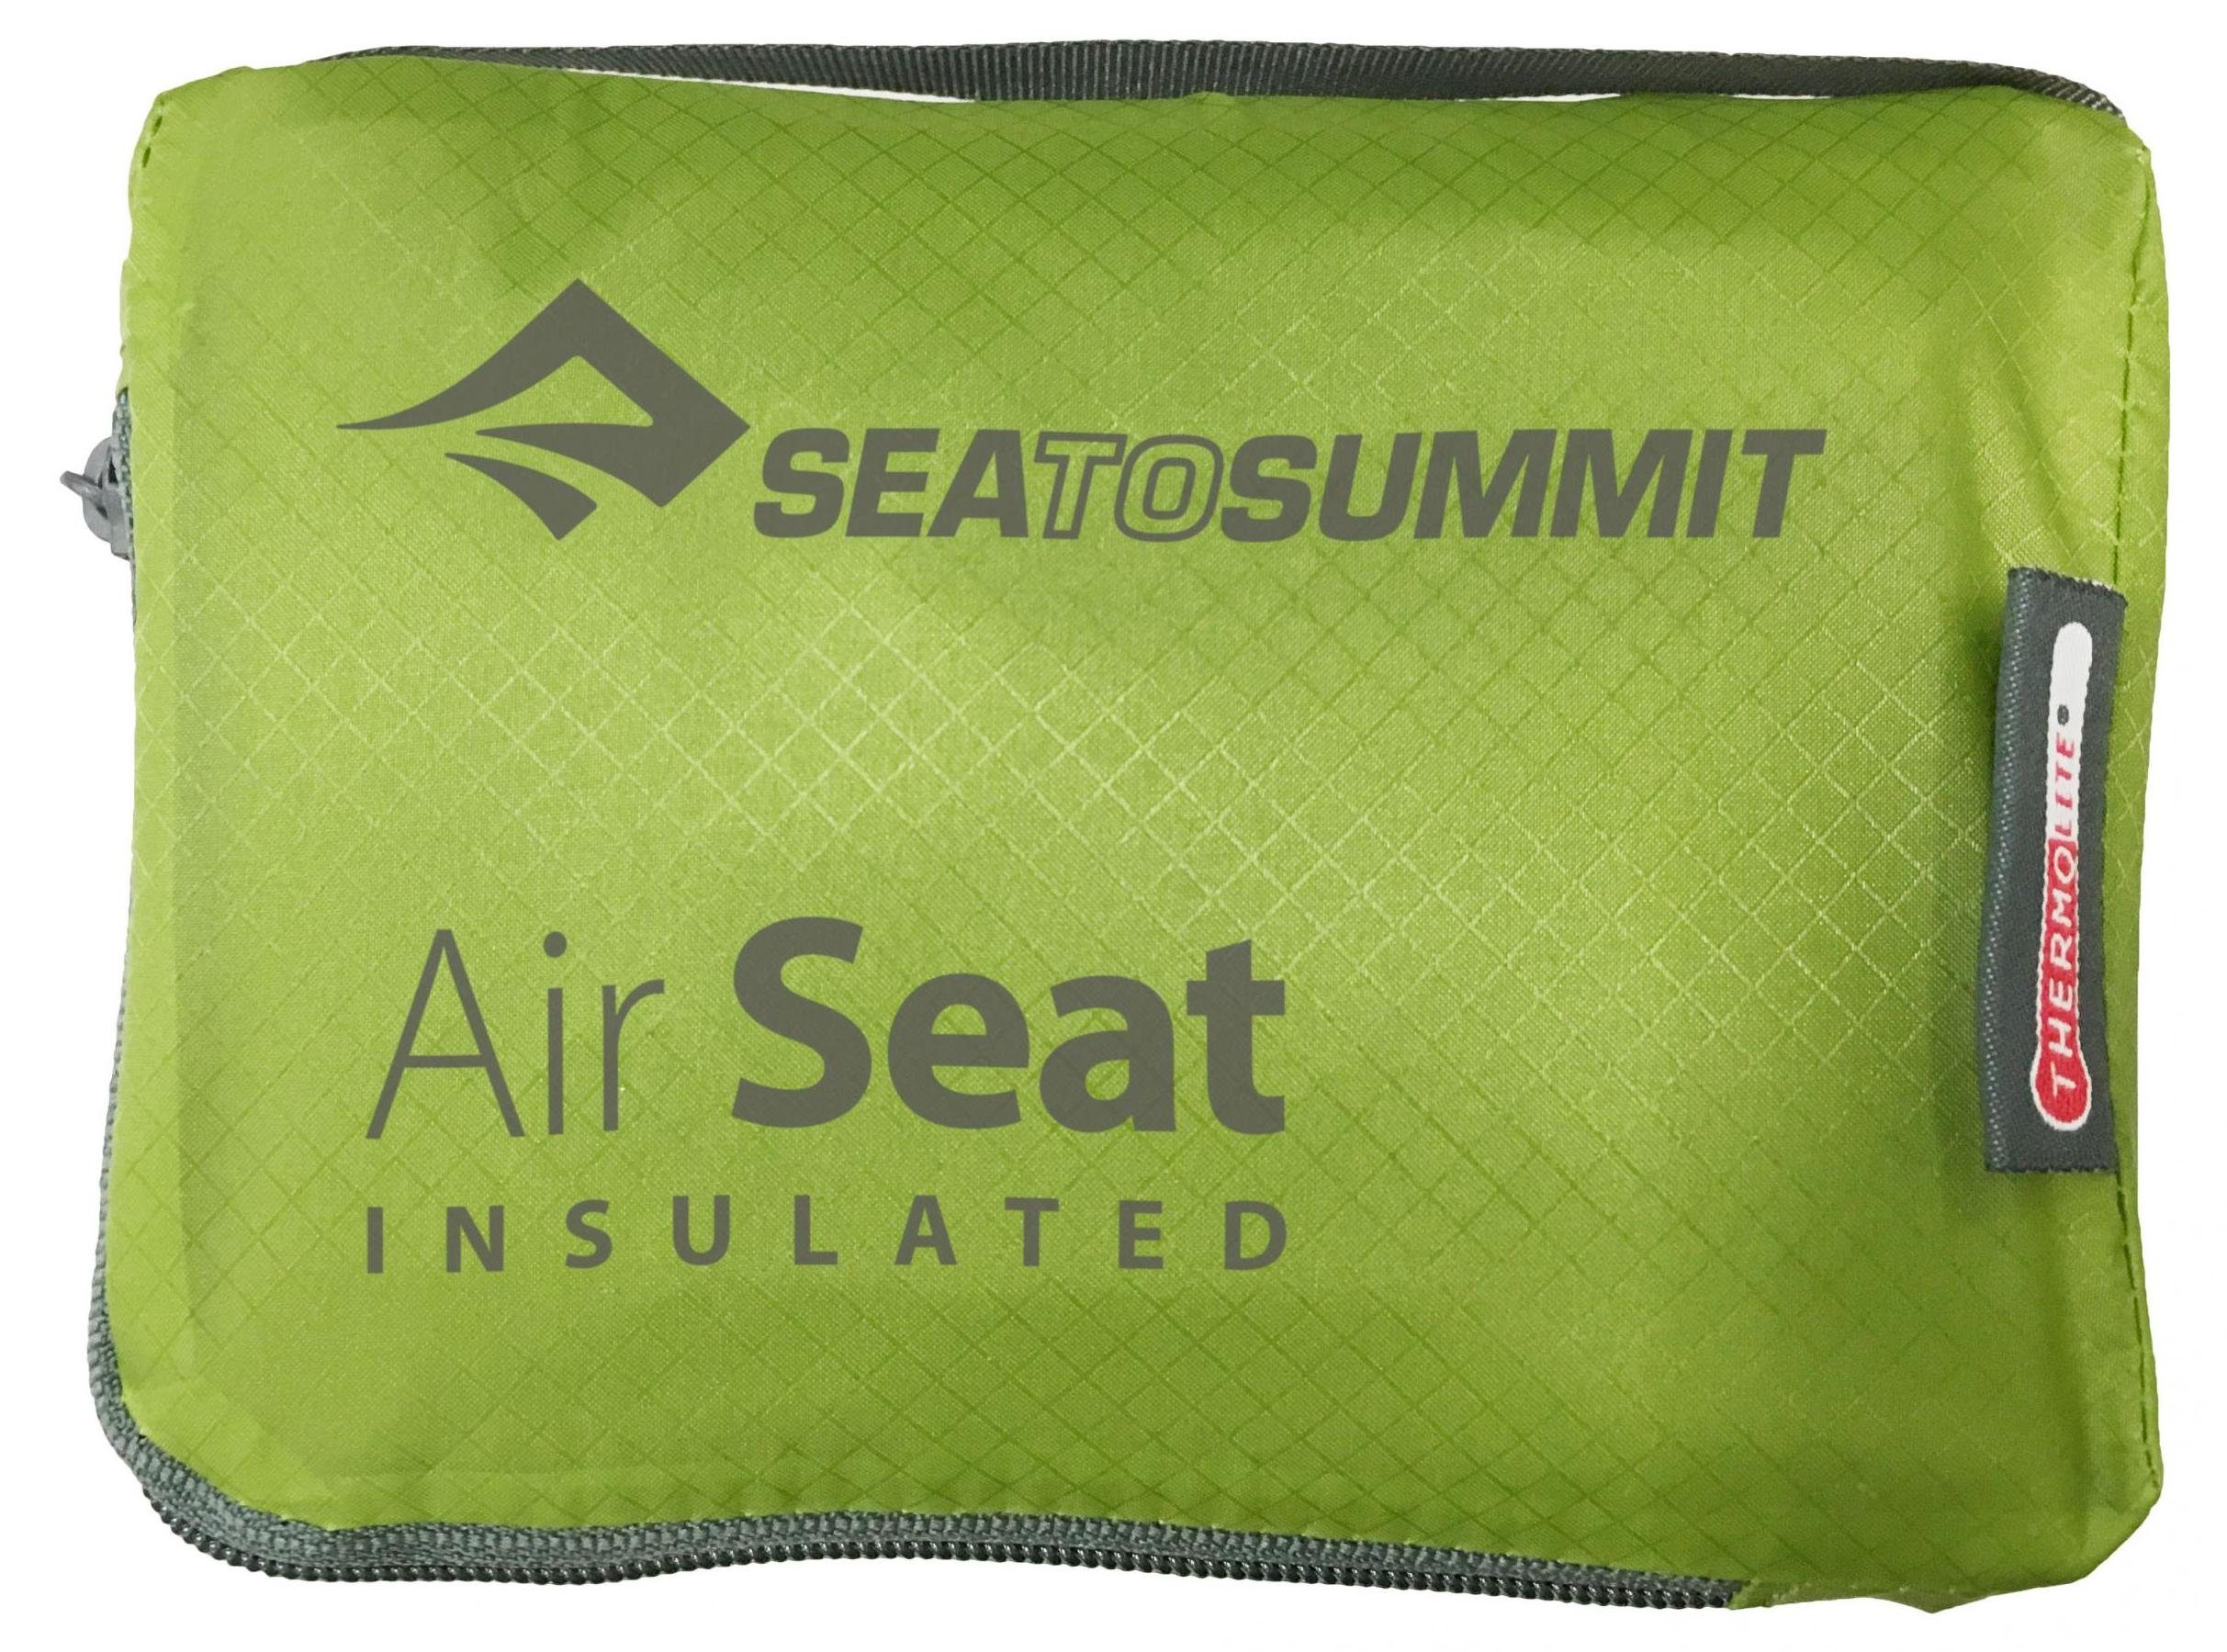 to Insulated Seat to Air sea Summit summit Sea Sitzkissen